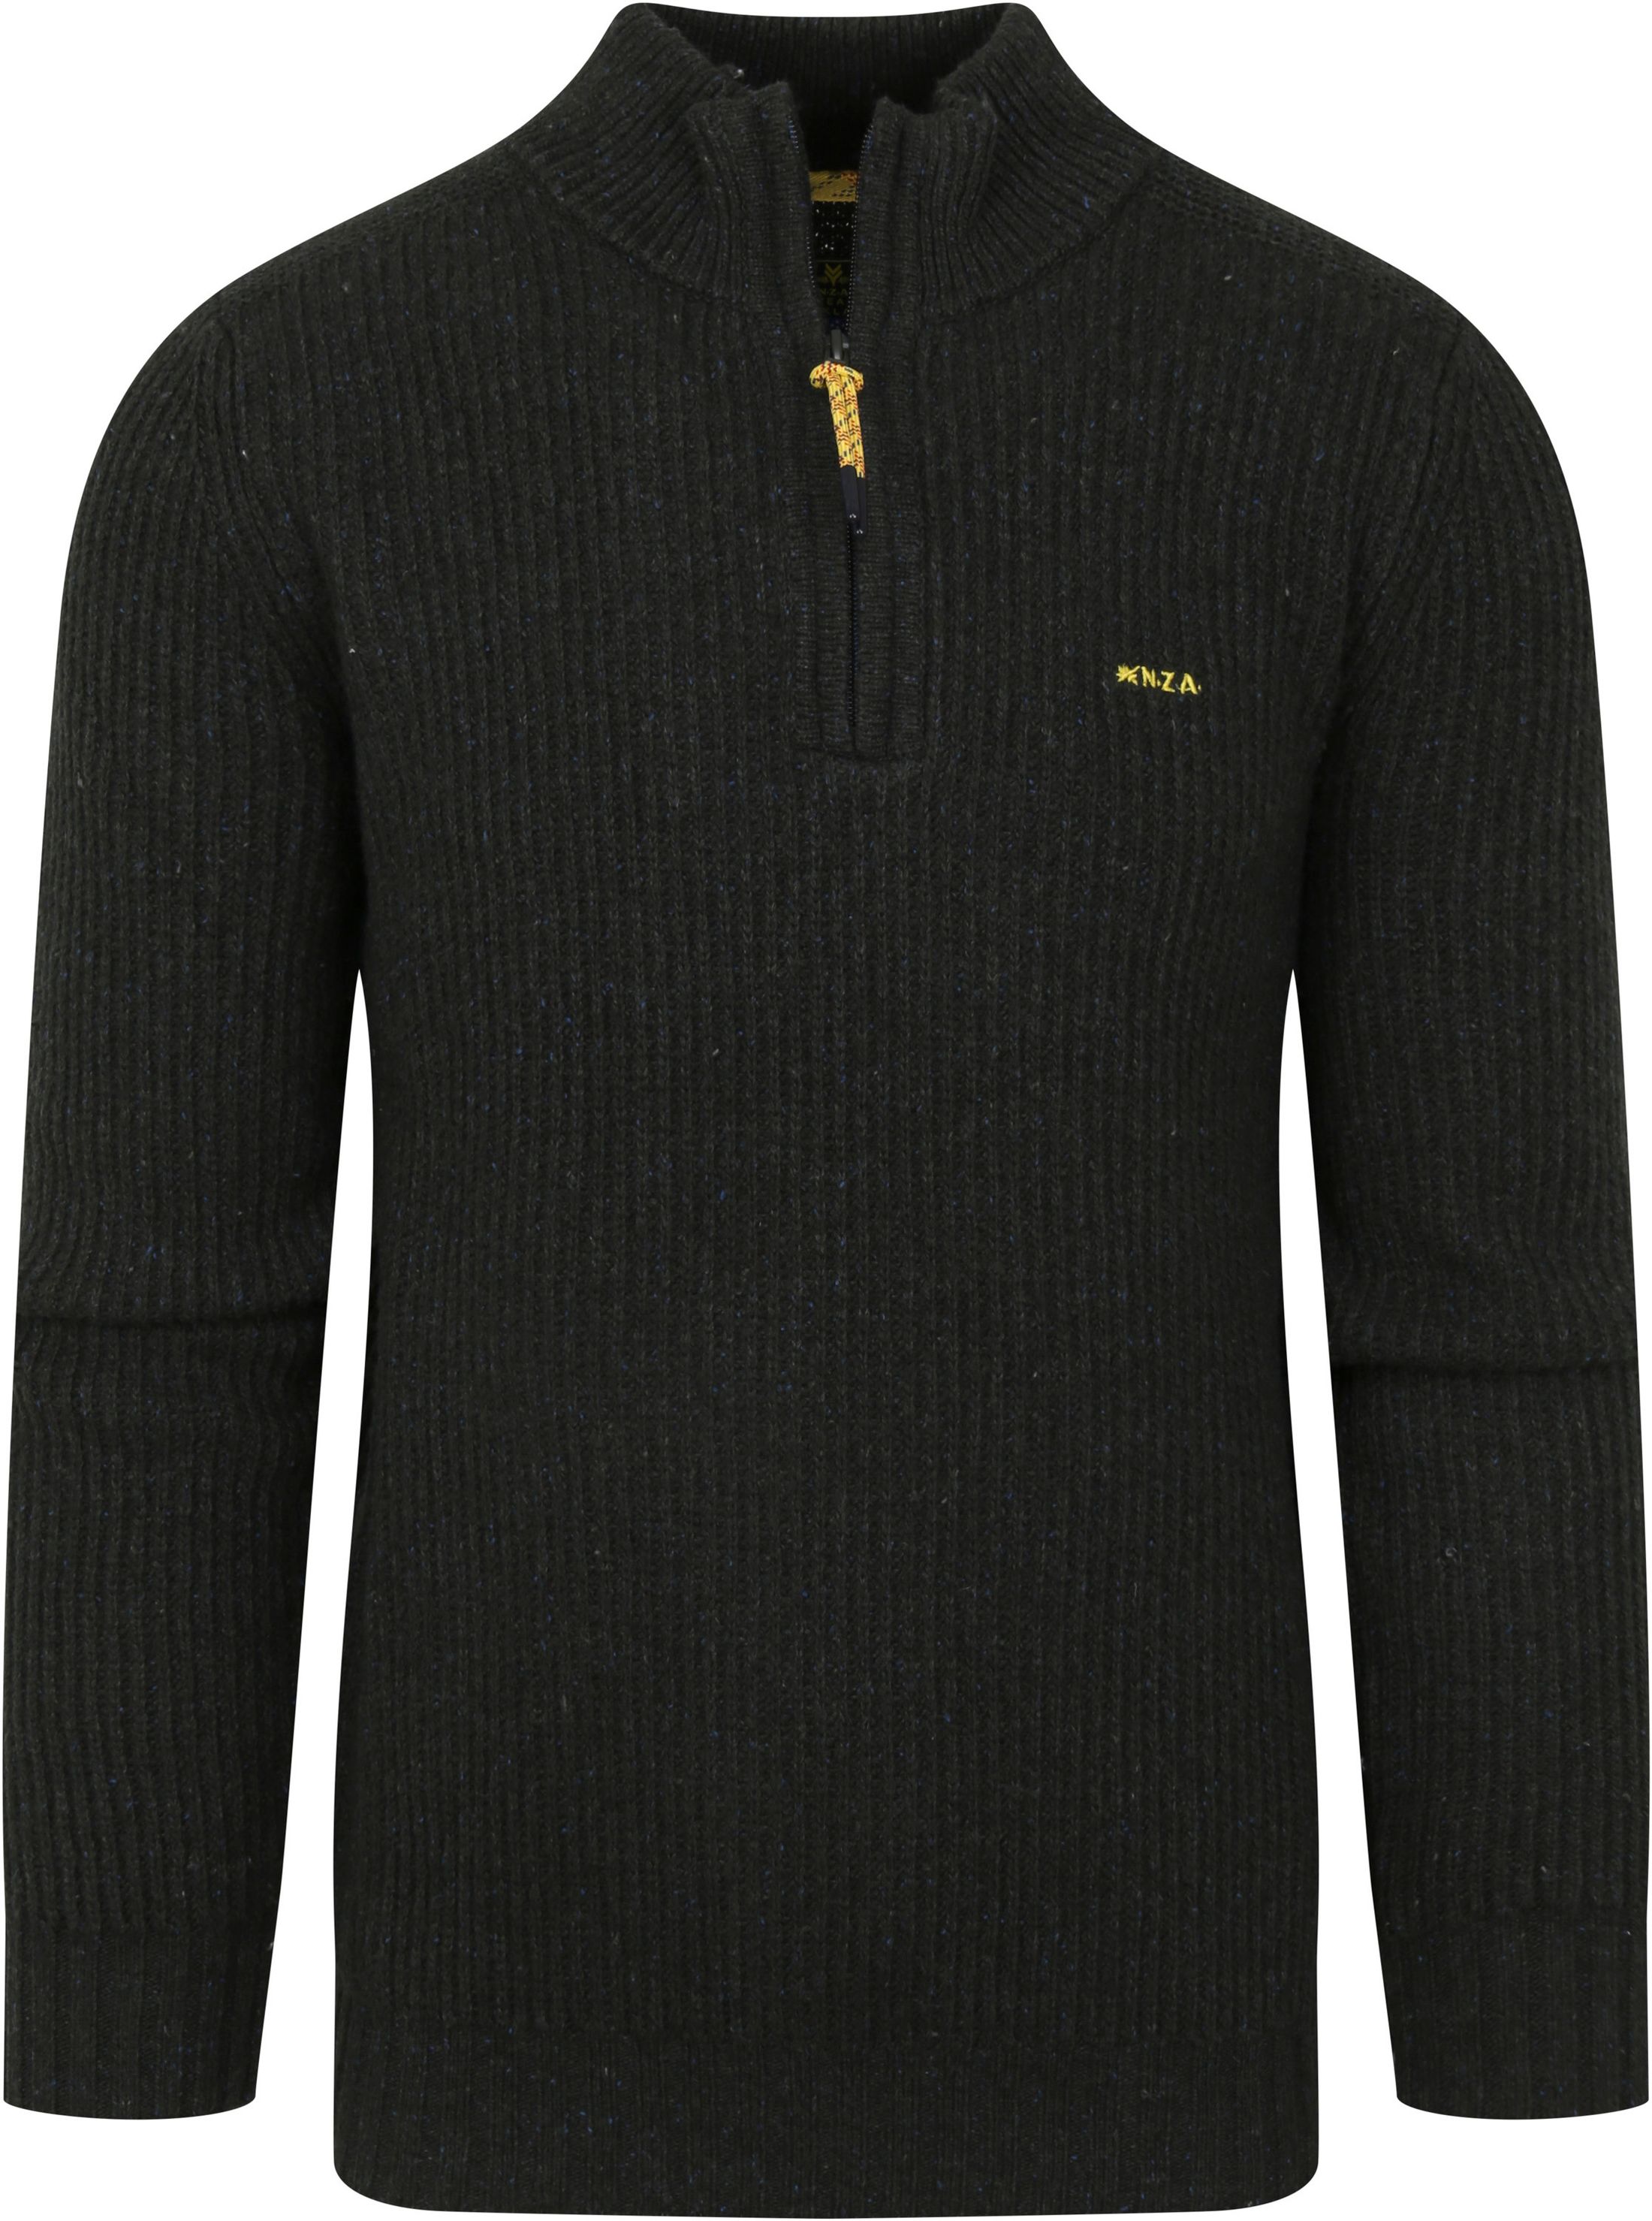 NZA Sweater Wool Dry Green size 3XL